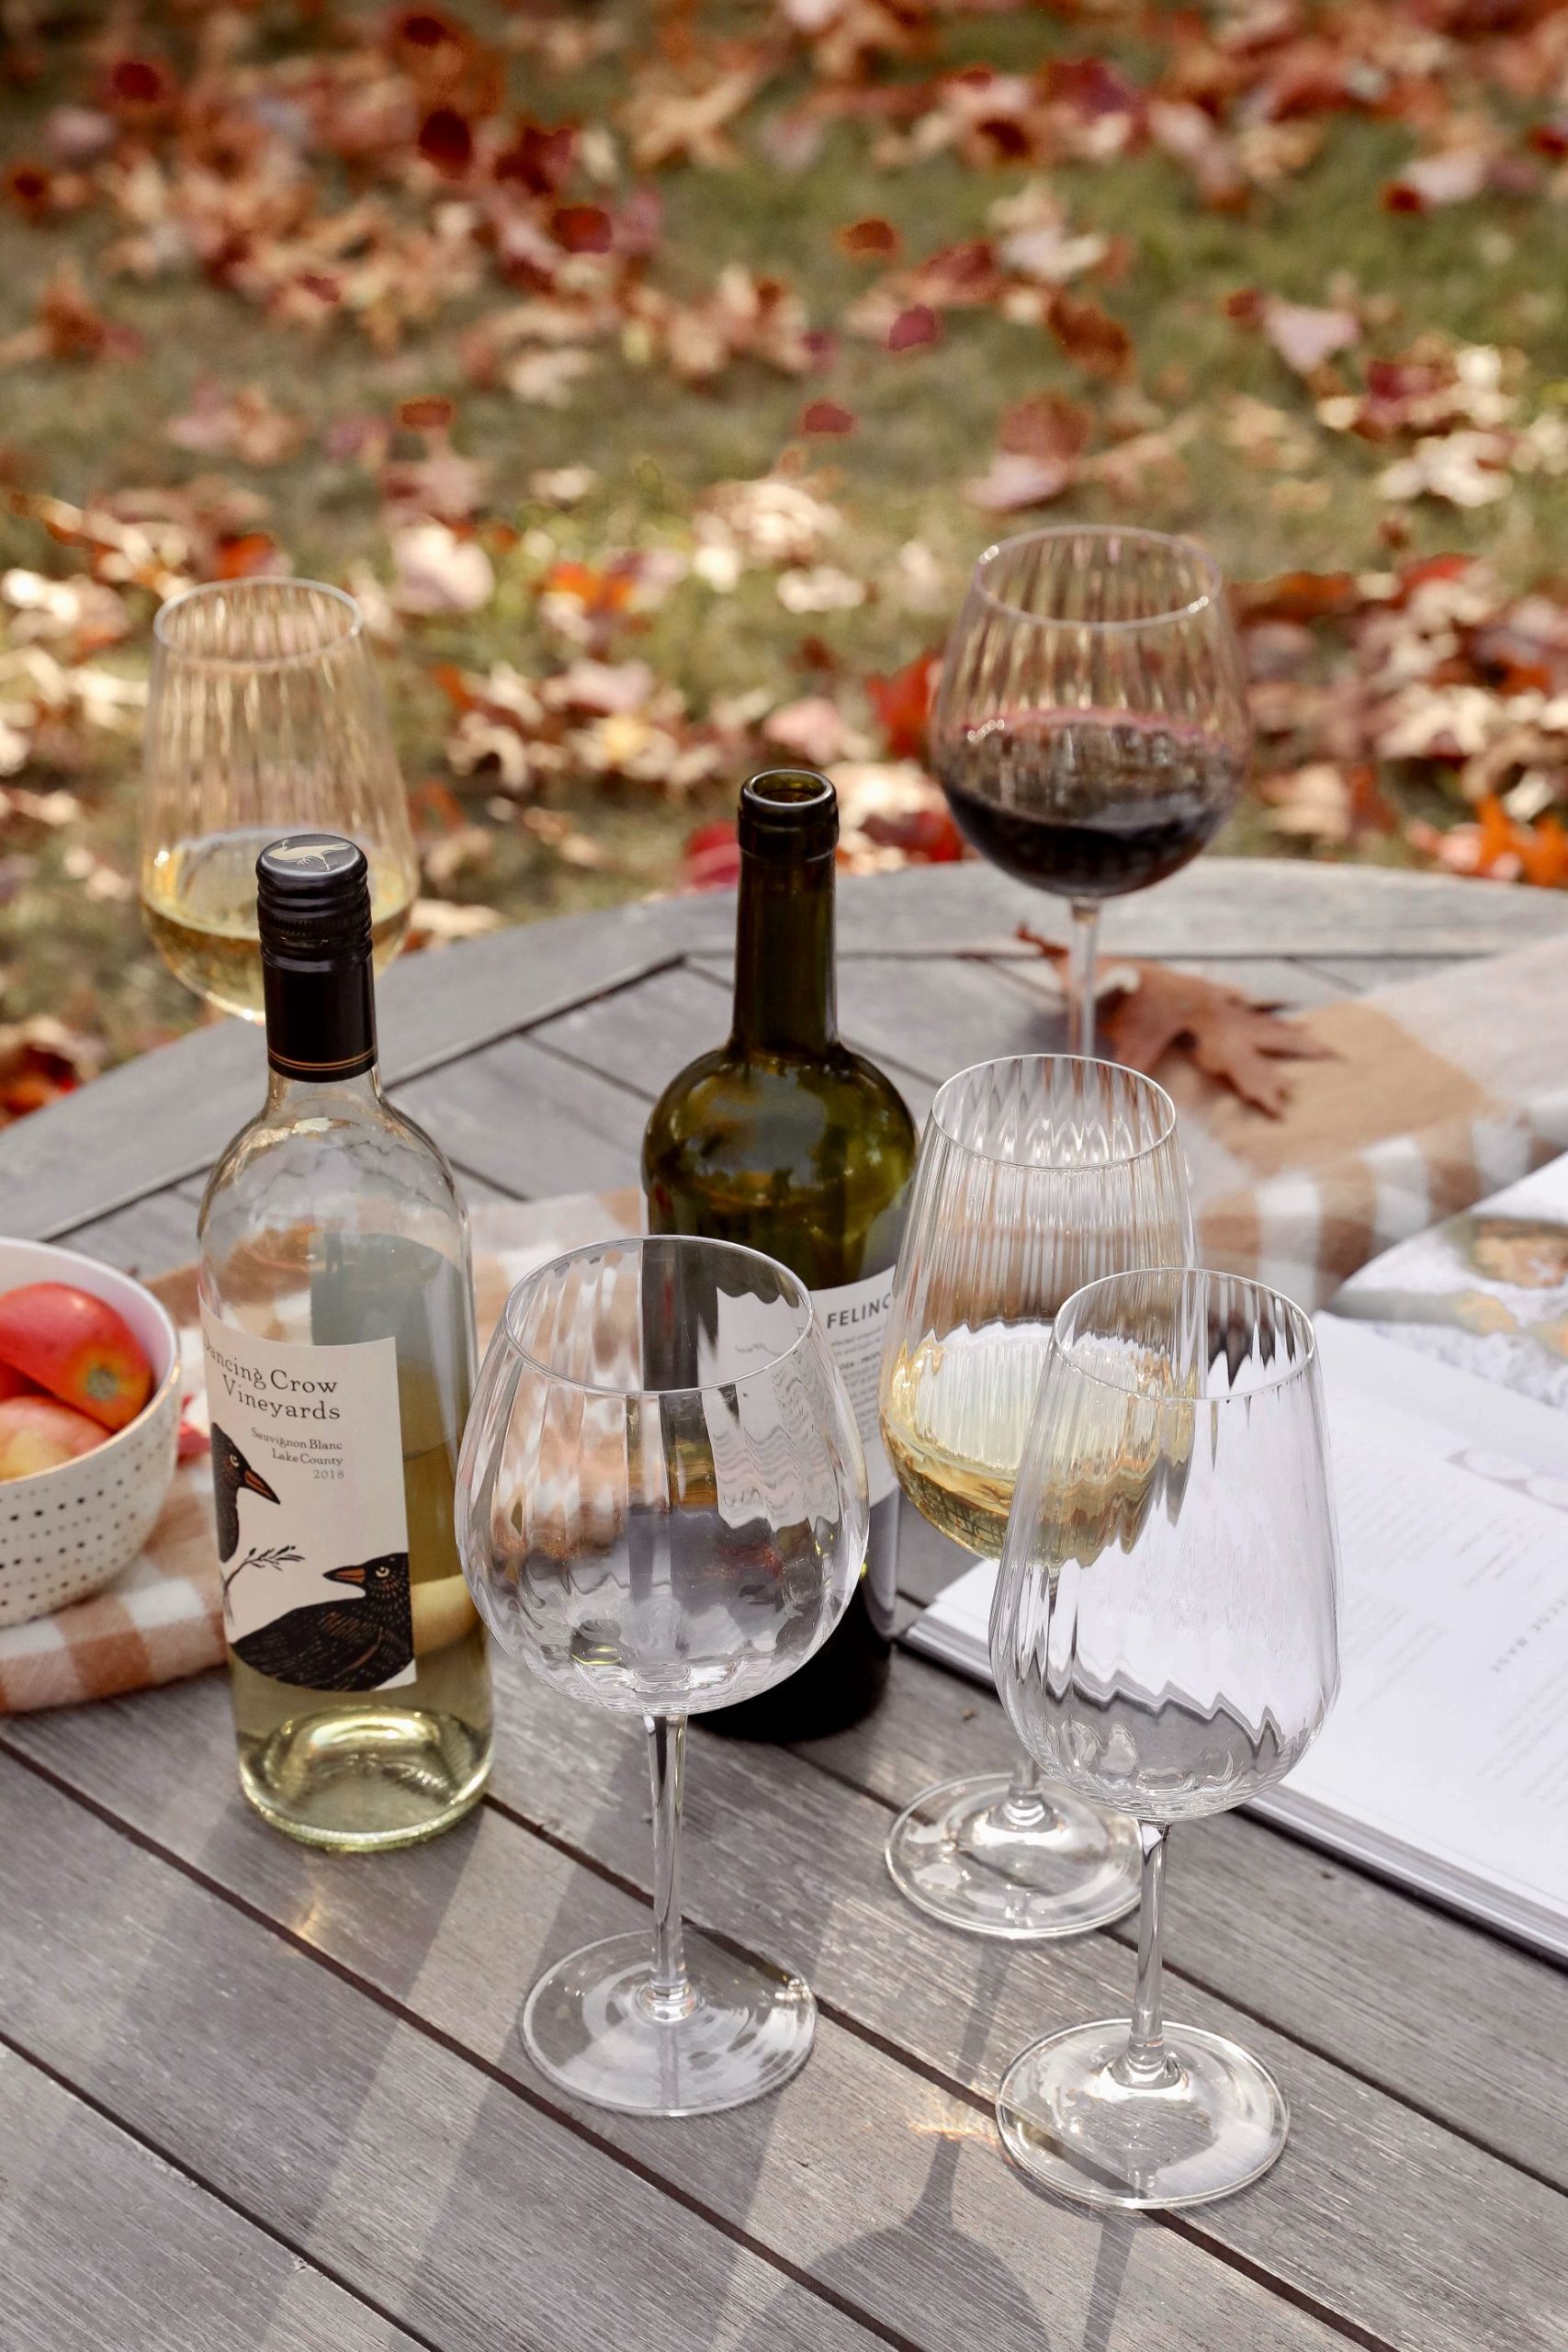 https://dailydoseofcharm.com/wp-content/uploads/2022/10/Ribbed-wine-glasses-red-white-fall-picnic-lauren-emily-lindmark-daily-dose-of-charm-3-scaled.jpg